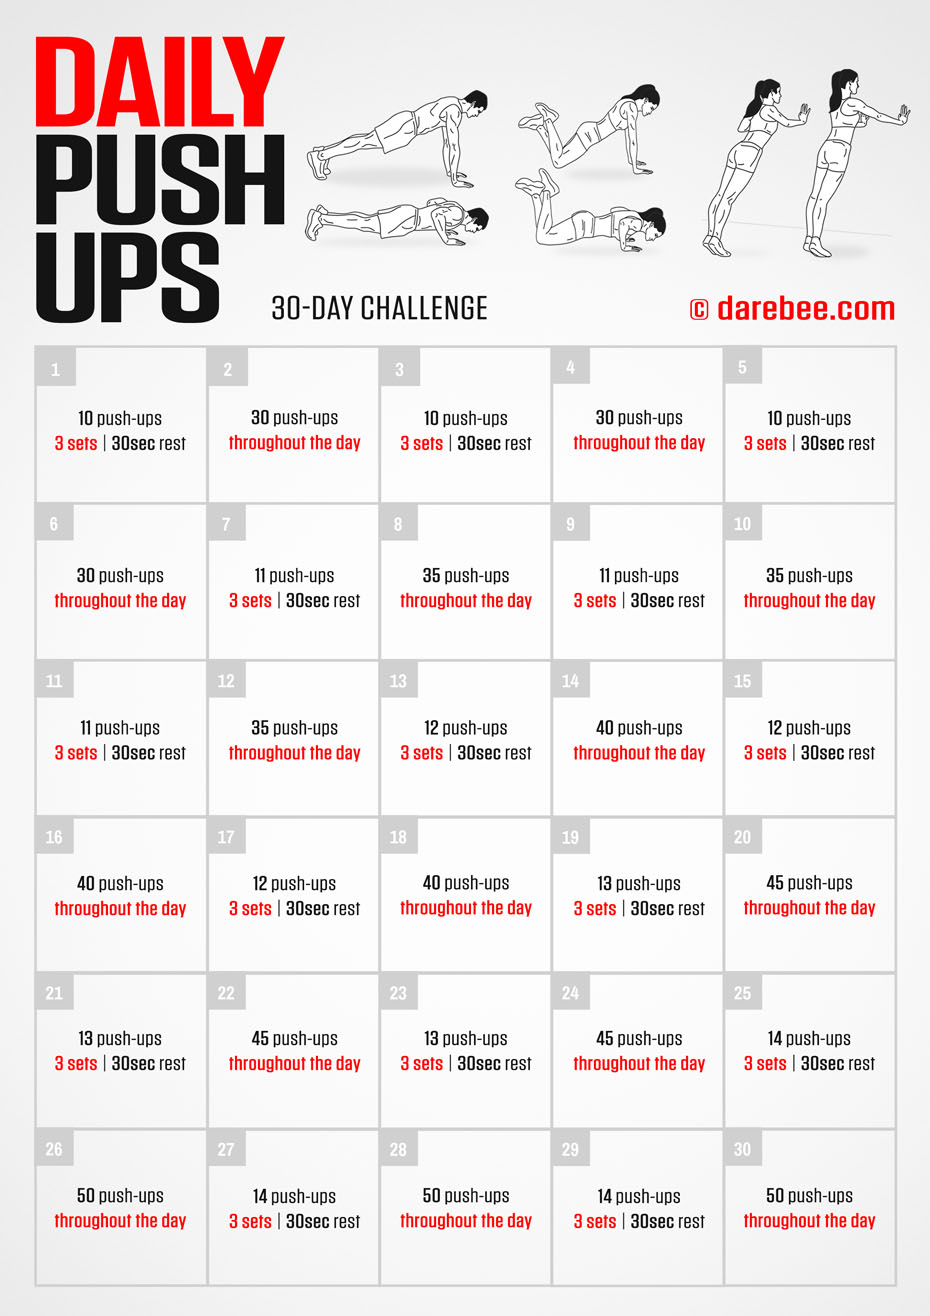 30 Day Push-up Challenge